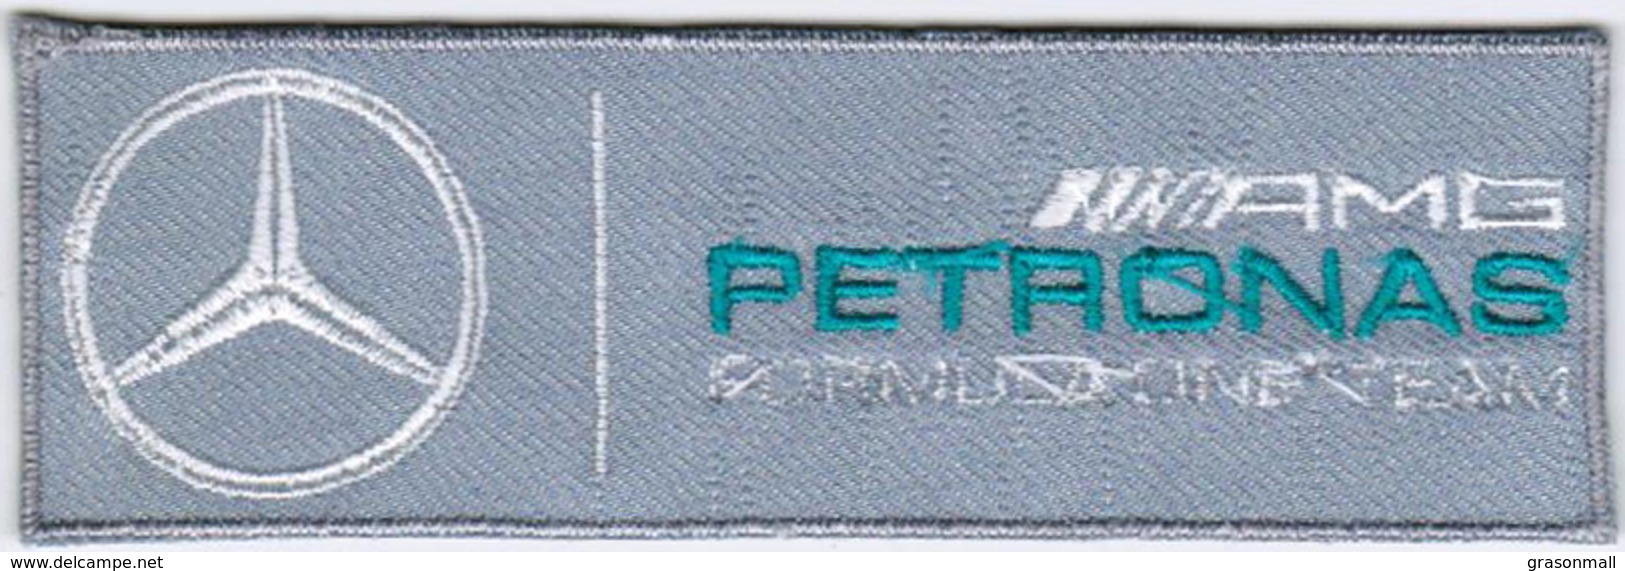 F1 Mercedes AMG Petronas GREY Formula 1 Team Auto Car Automobile Racing Patch - Patches